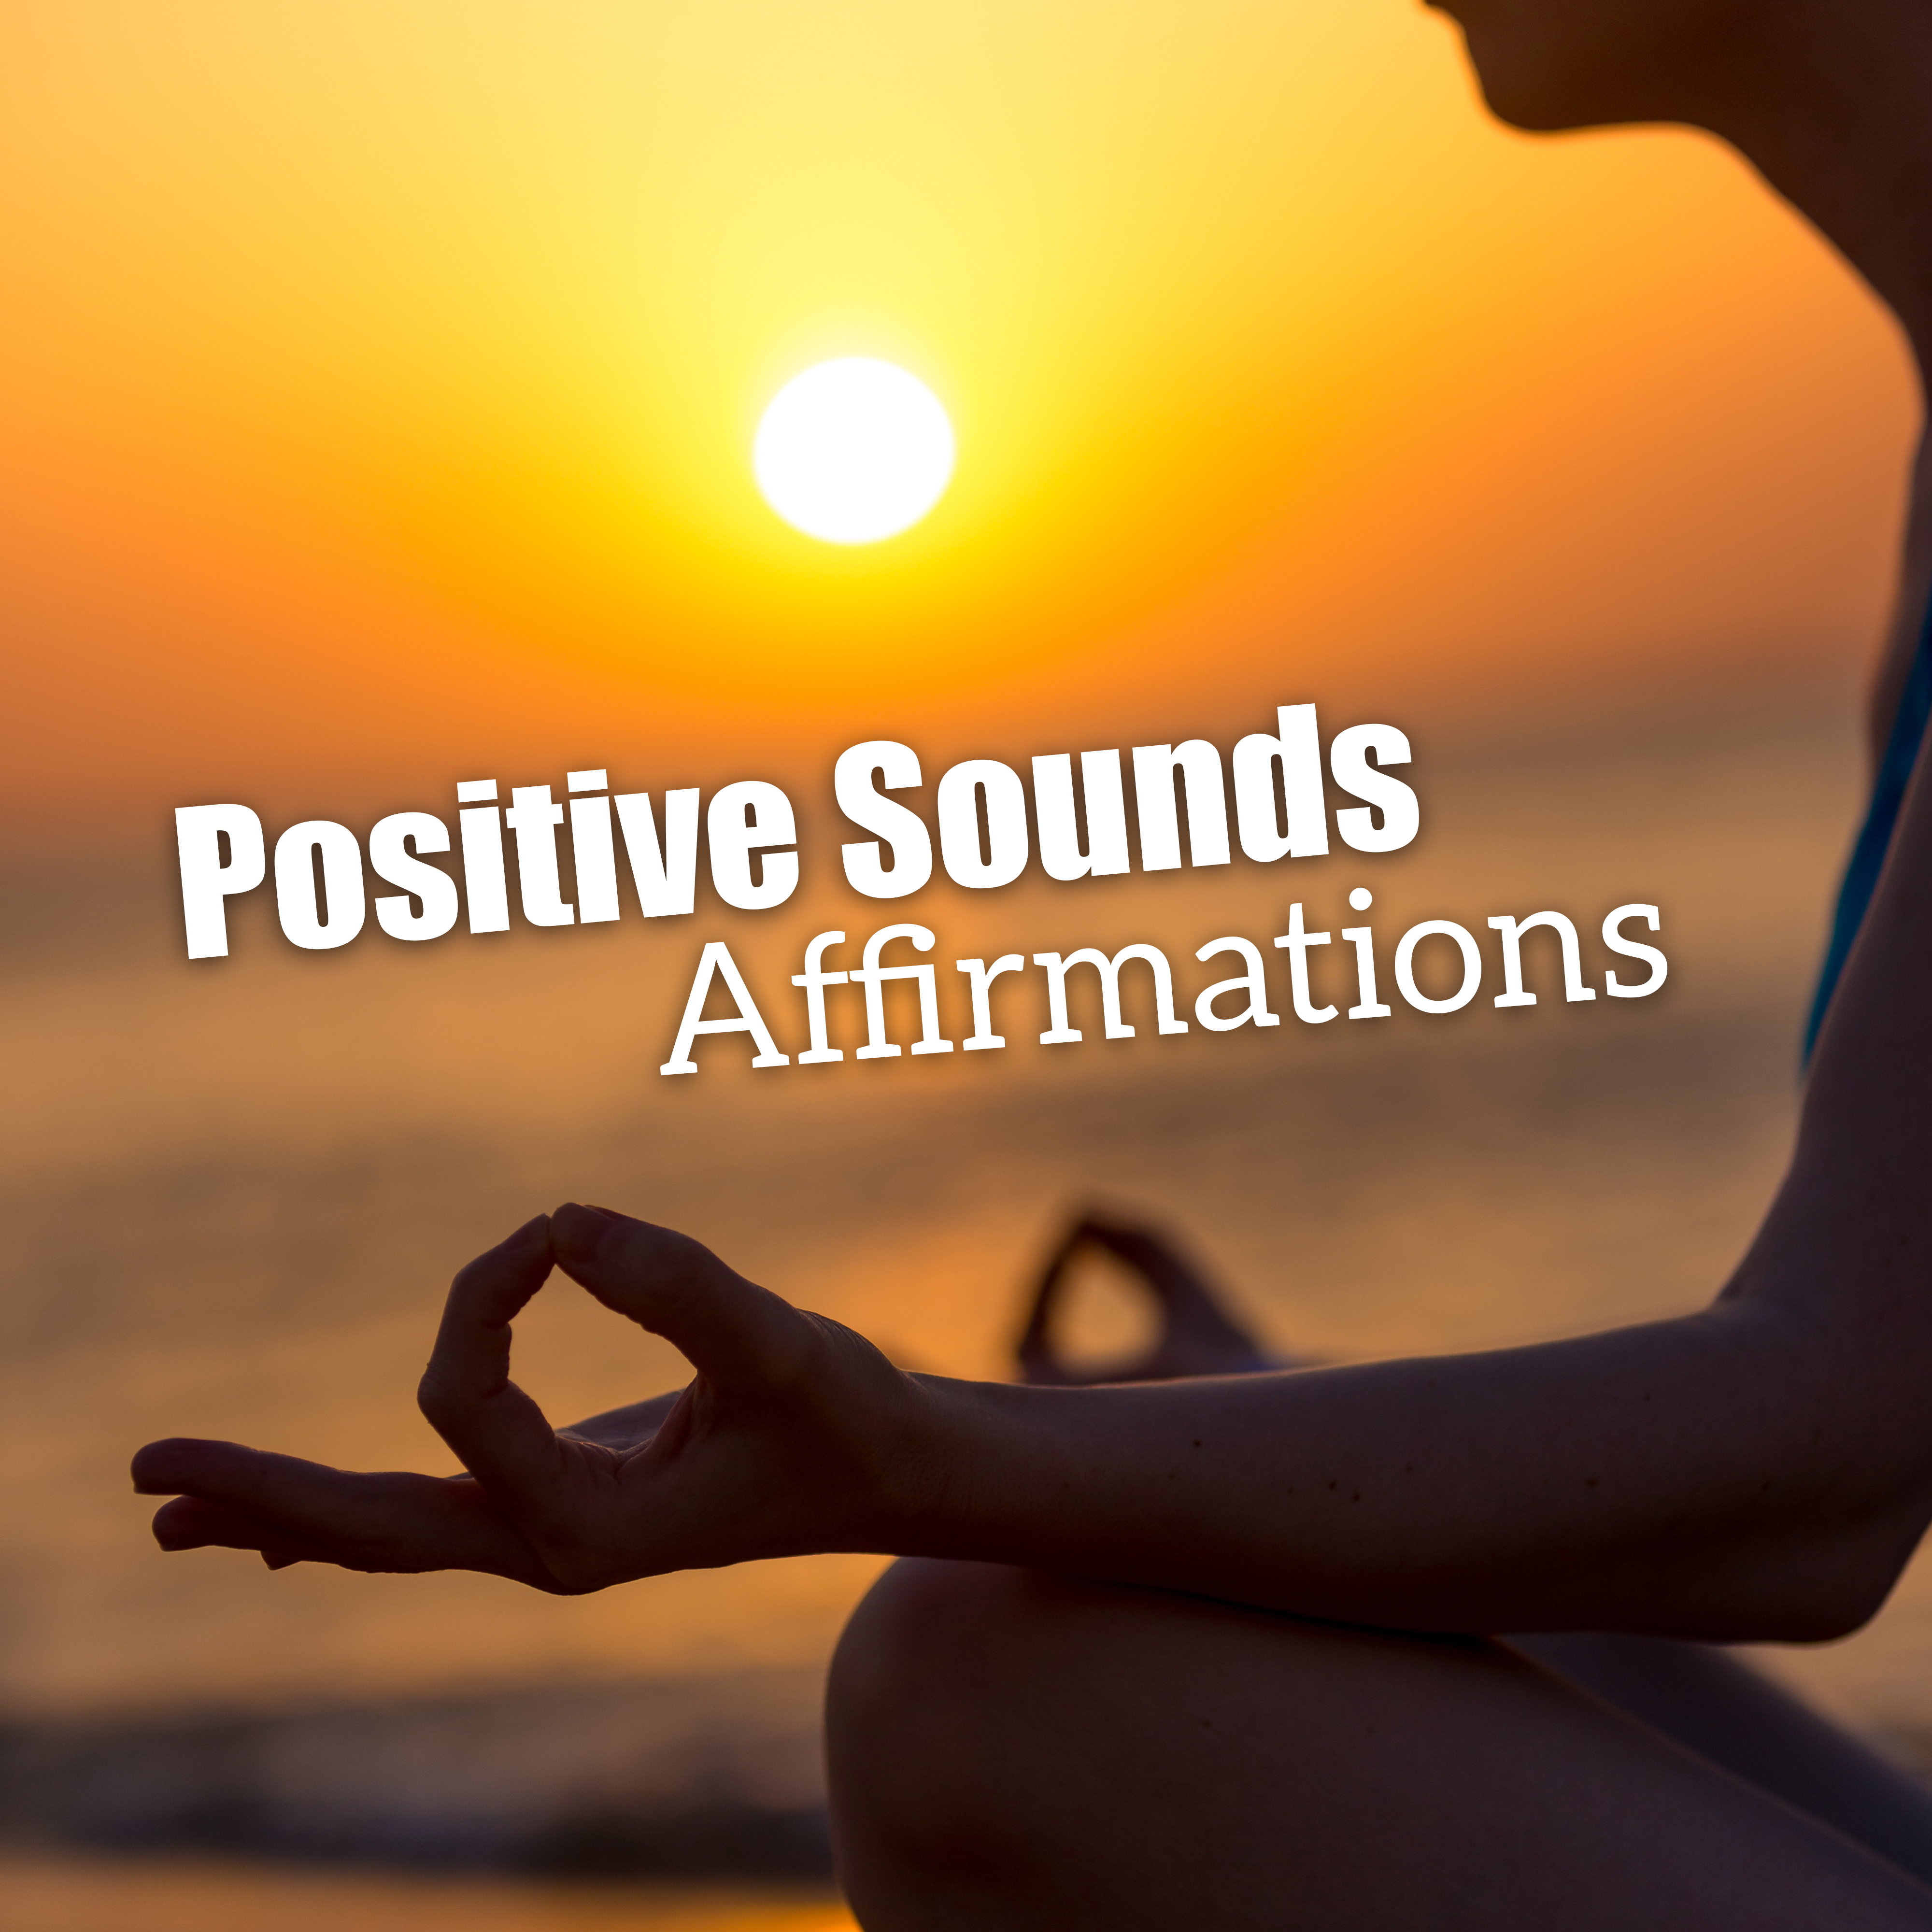 Positive Sounds Affirmations